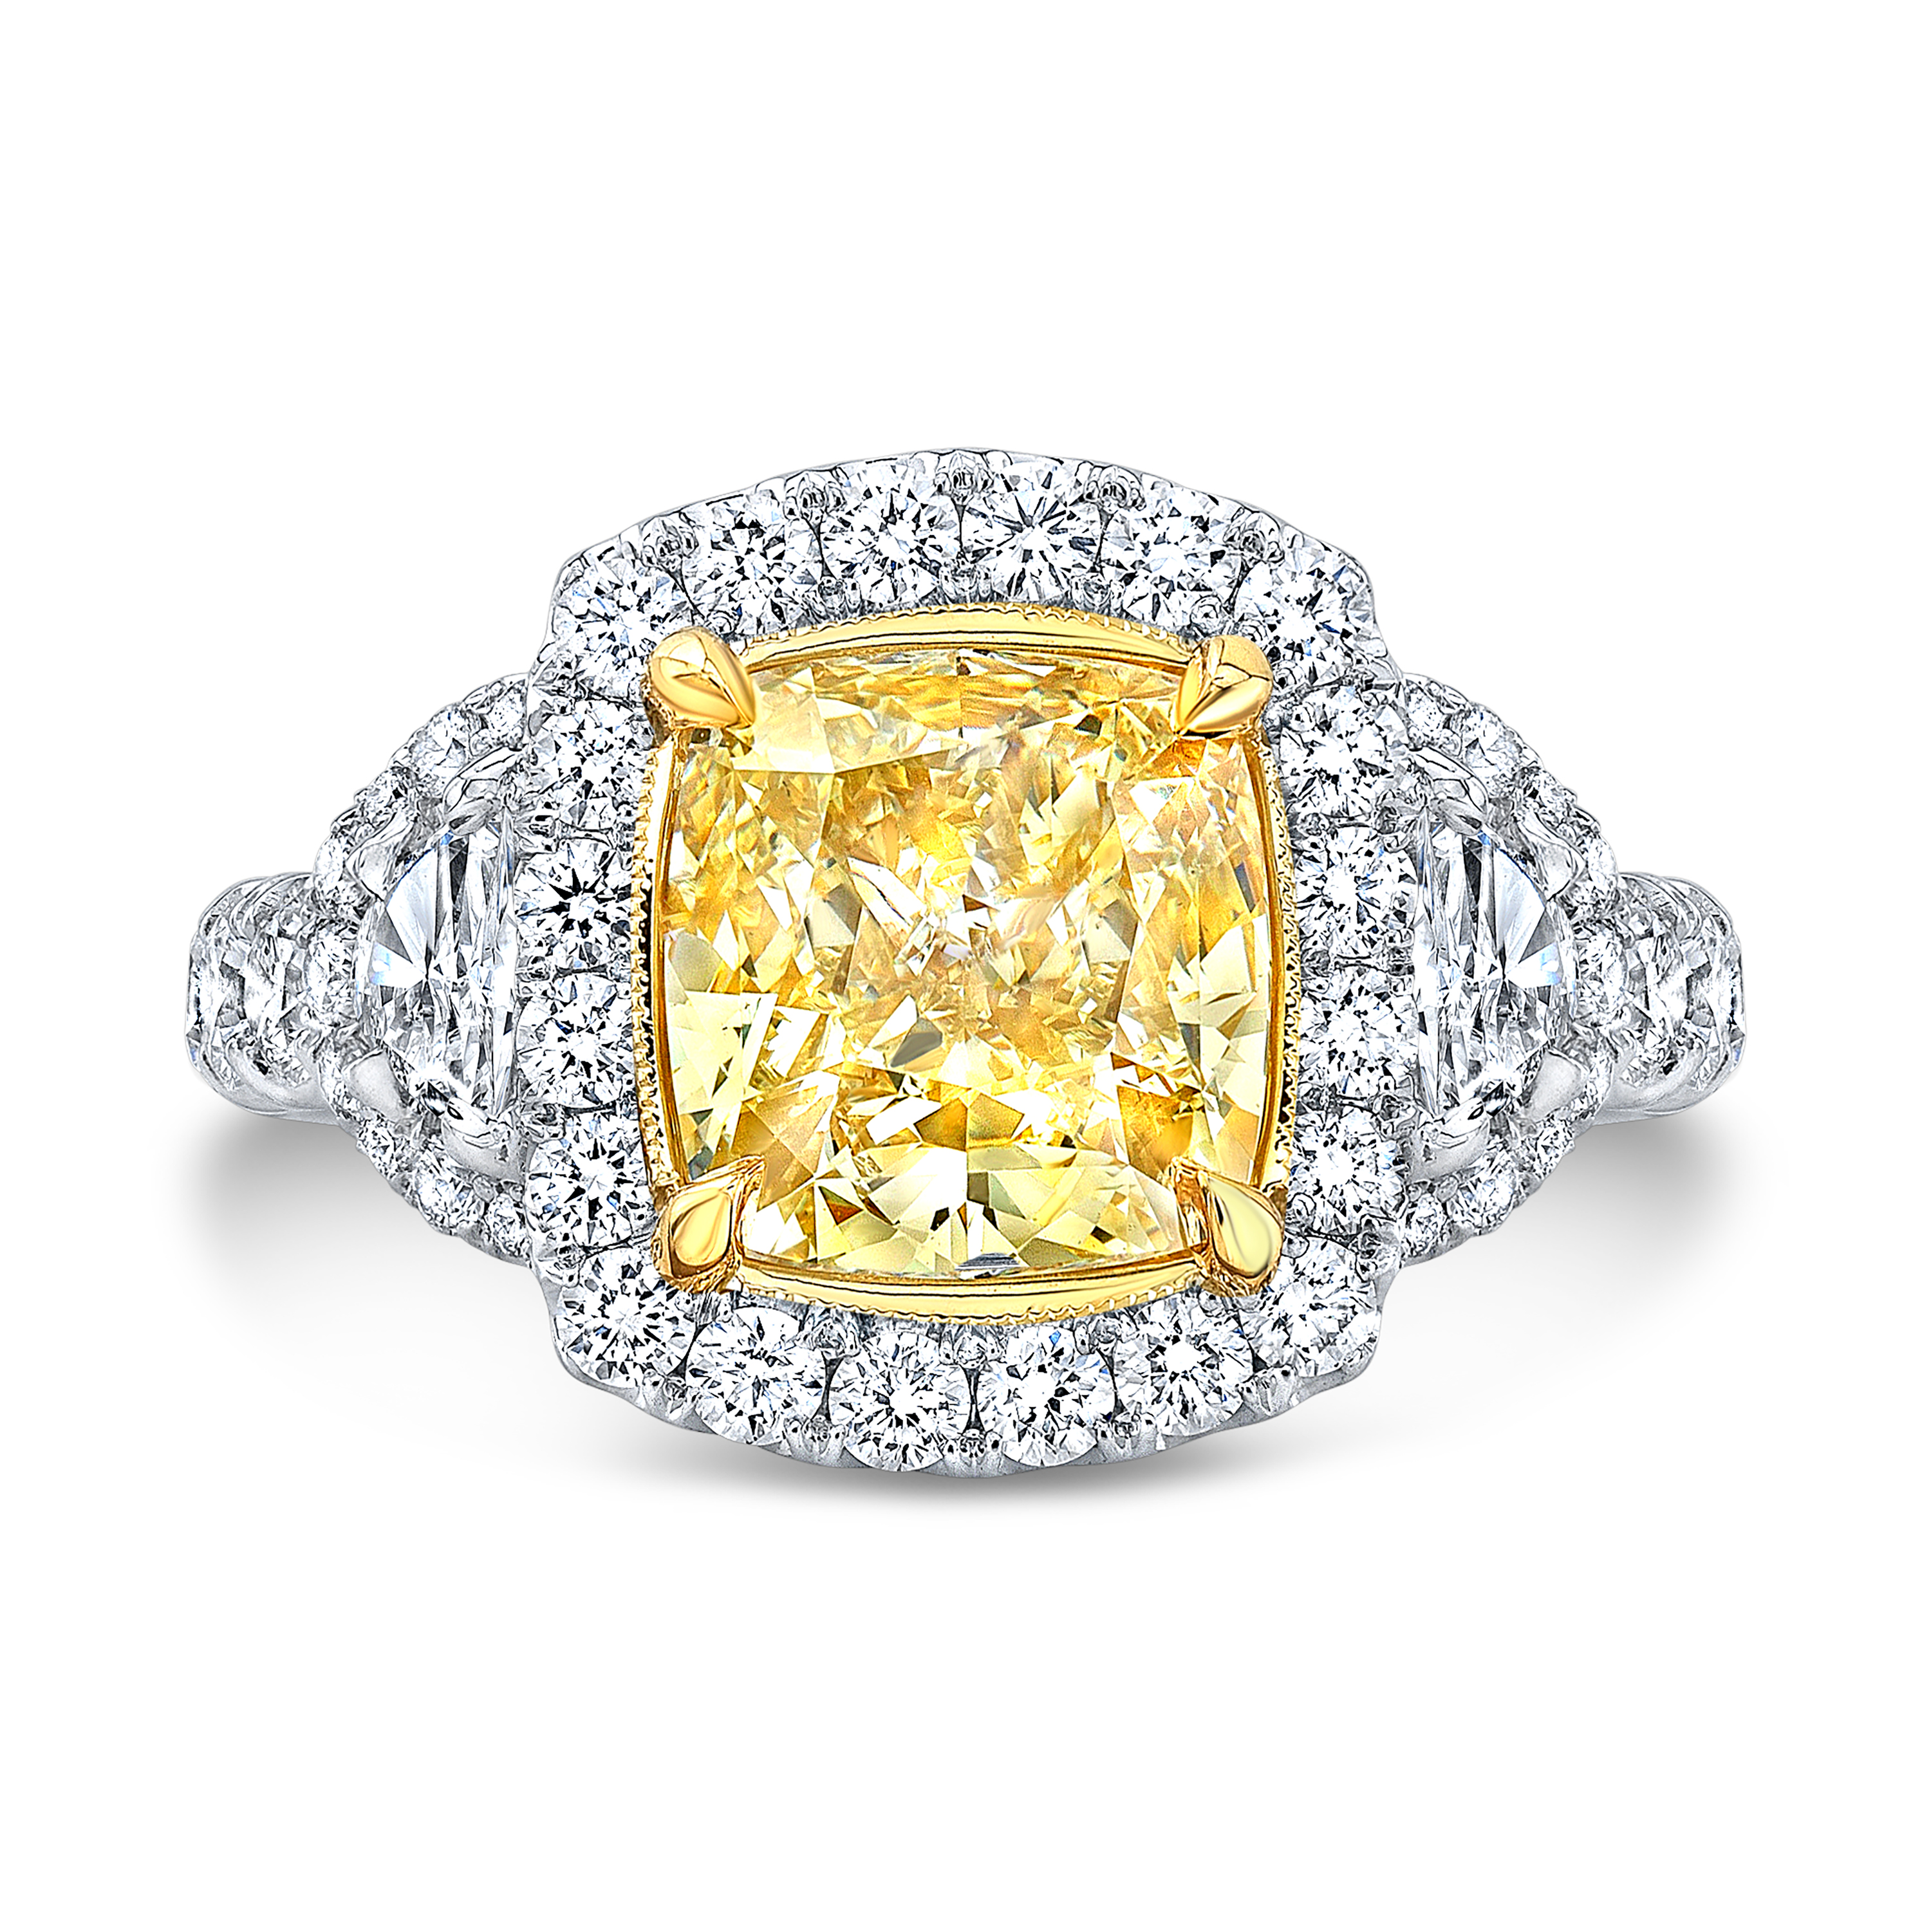 Yellow Diamond Canary on Sale, 52% OFF | www.pegasusaerogroup.com